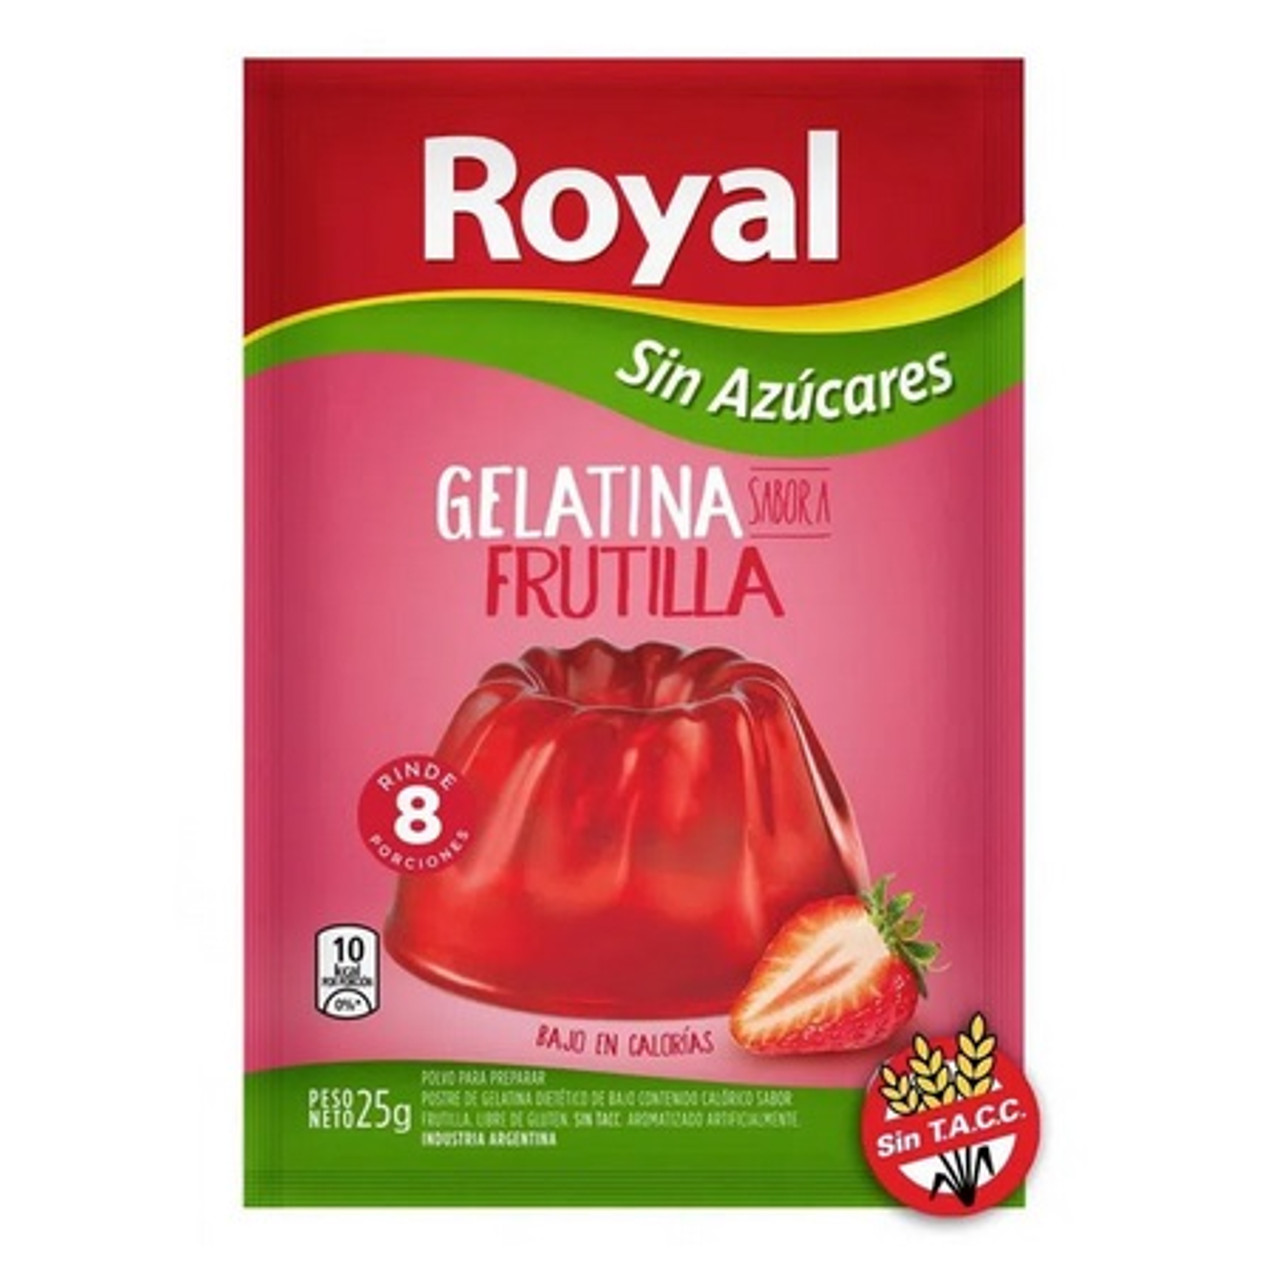 Royal Strawberry Ready to Make Light Jelly Gelatina Frutilla Sin Azúcares  Jell-O, 8 servings per pouch 25 g / 0.88 oz pouch